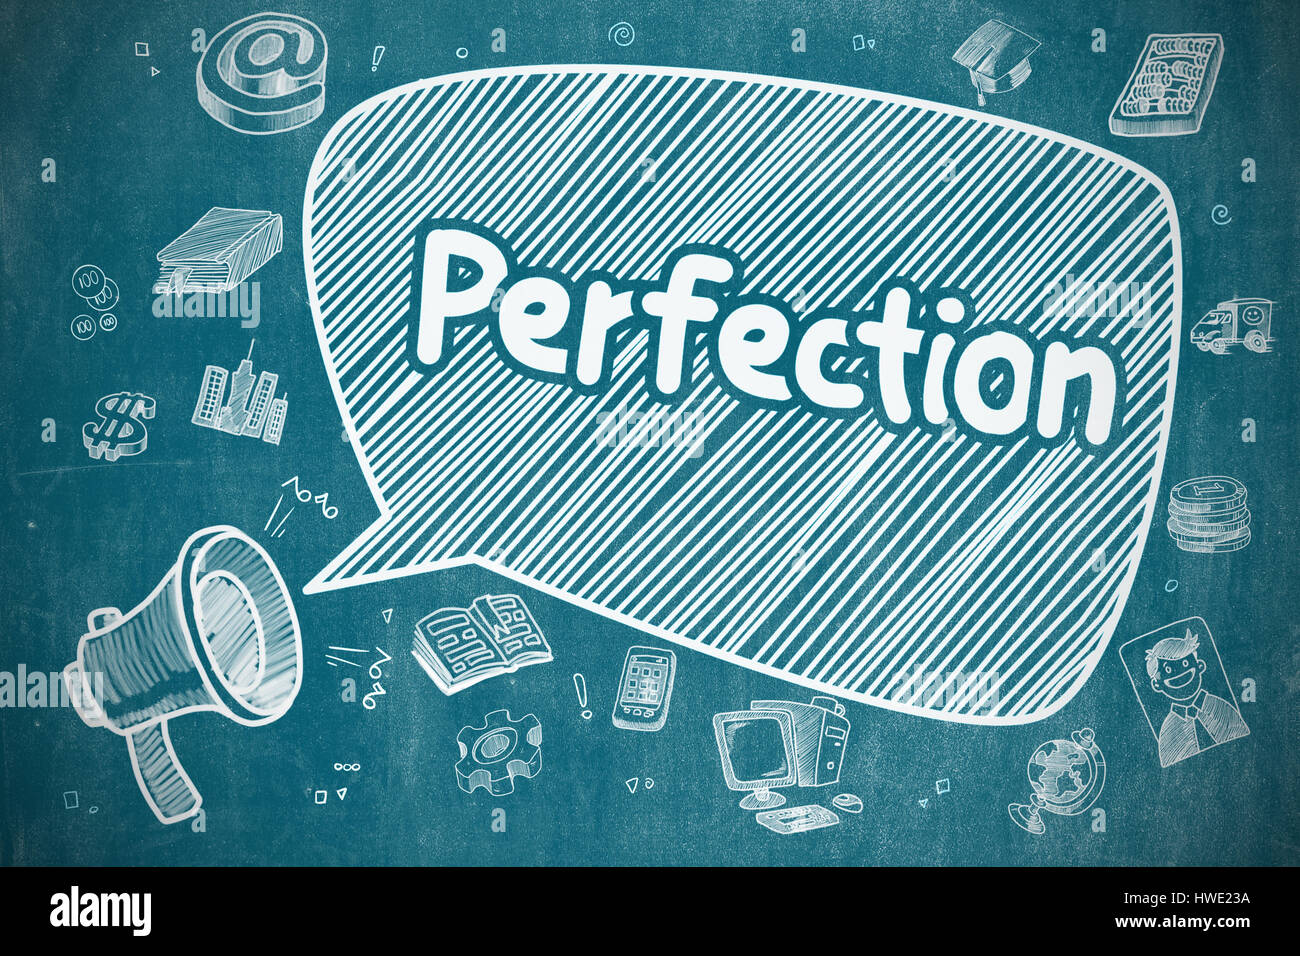 Perfection - Hand Drawn Illustration on Blue Chalkboard. Stock Photo